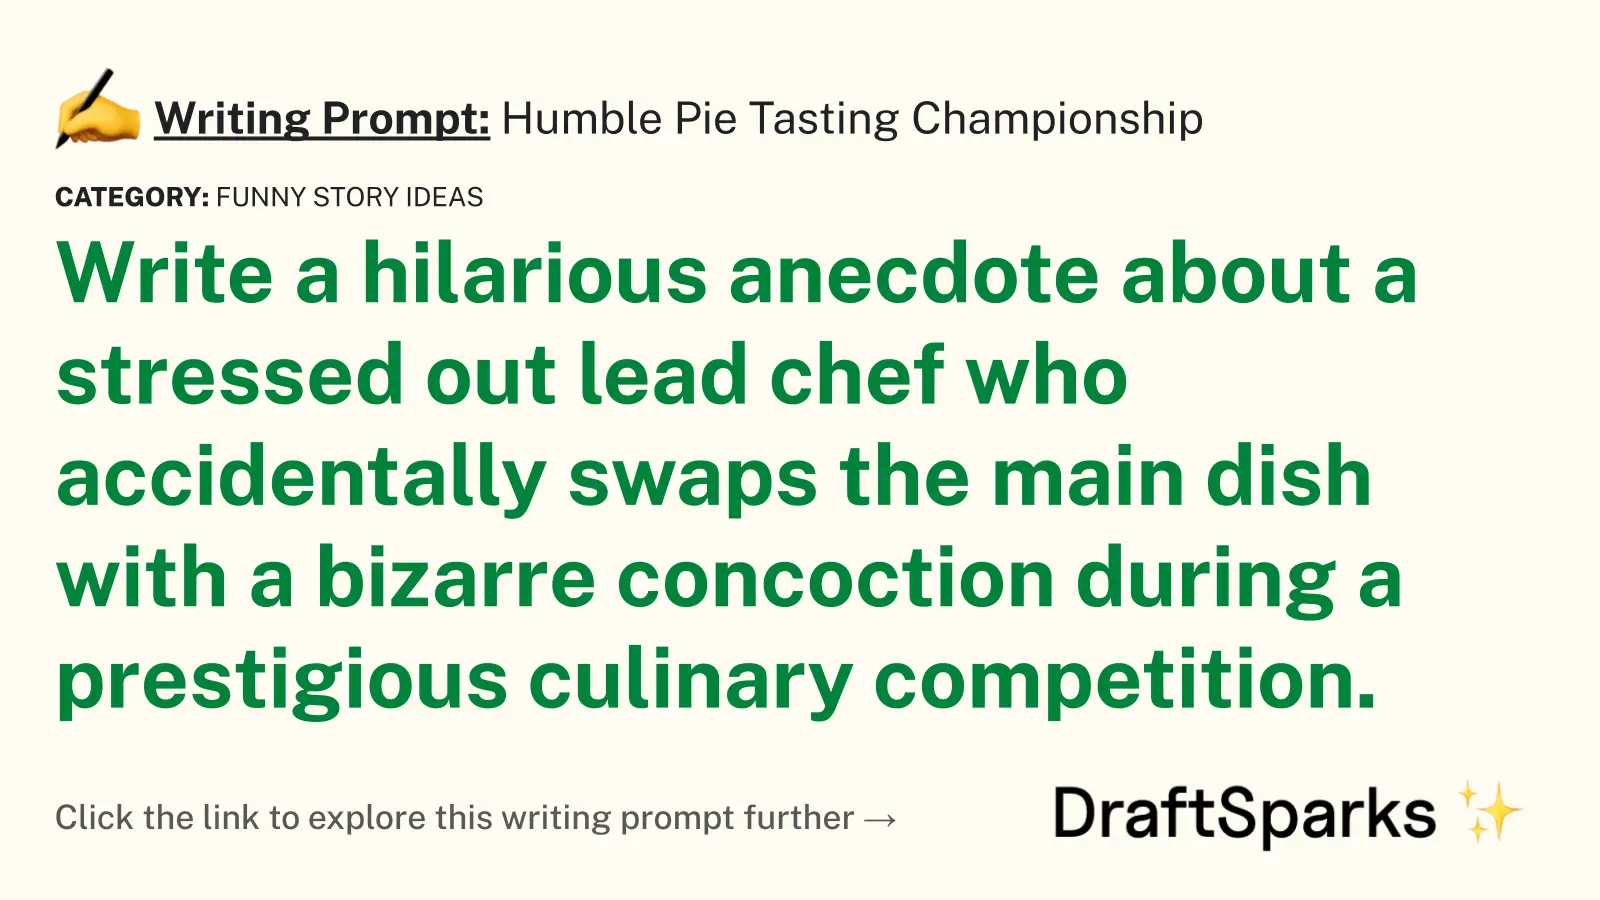 Humble Pie Tasting Championship